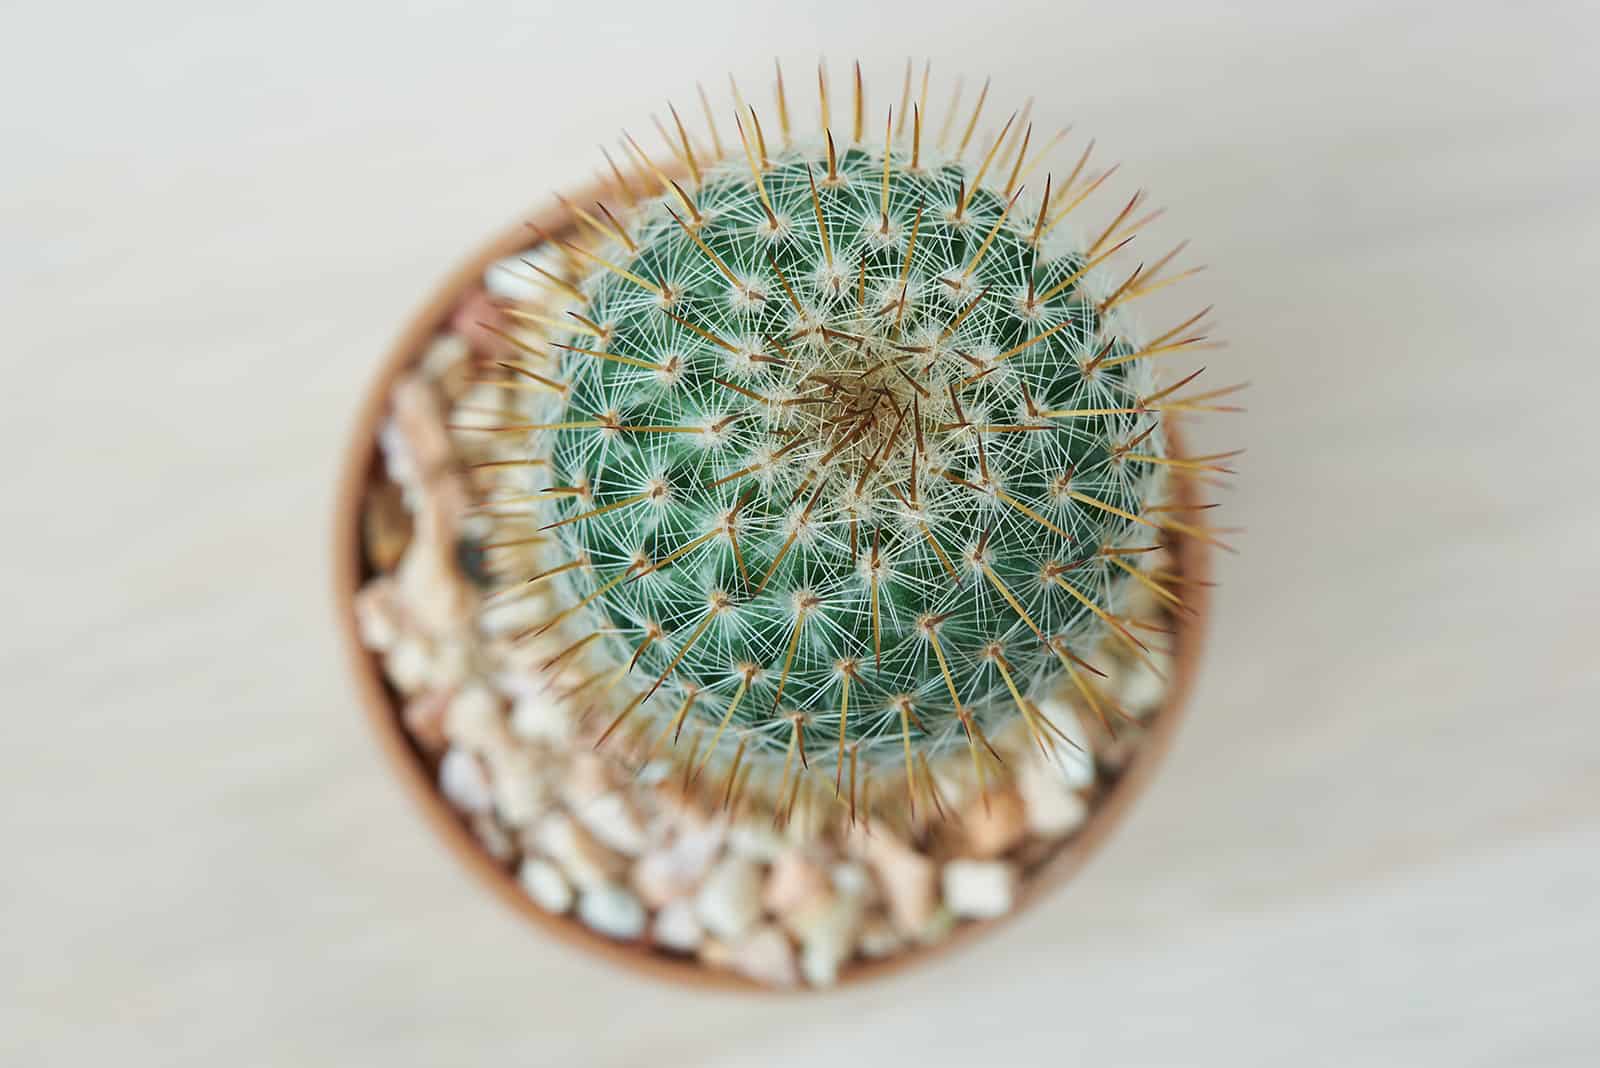 pincushion cactus in the pot